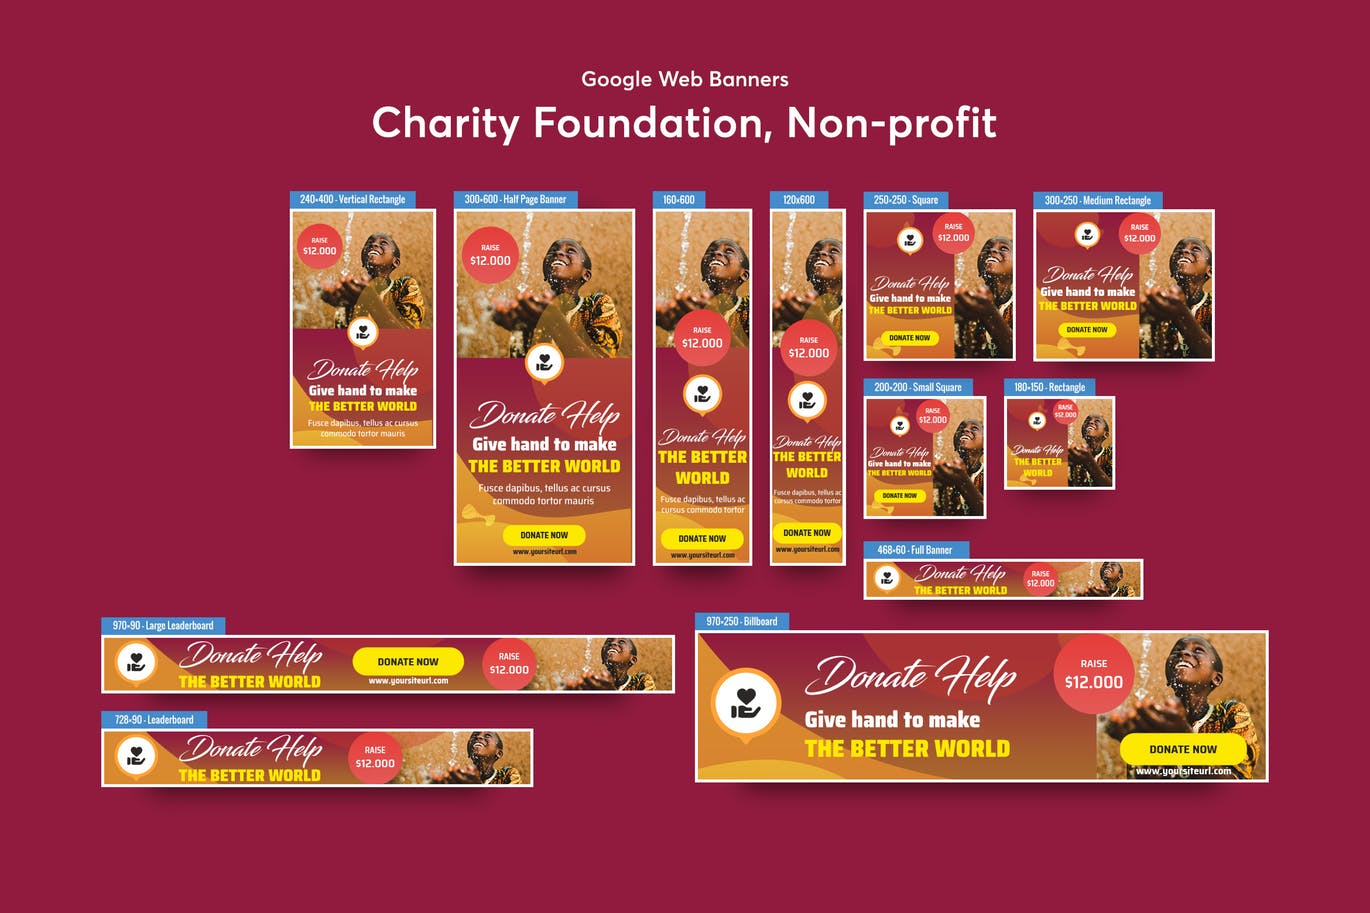 慈善基金会非营利组织推广Banner非凡图库精选广告模板 Charity Foundation, Non-profit Banners Ad插图